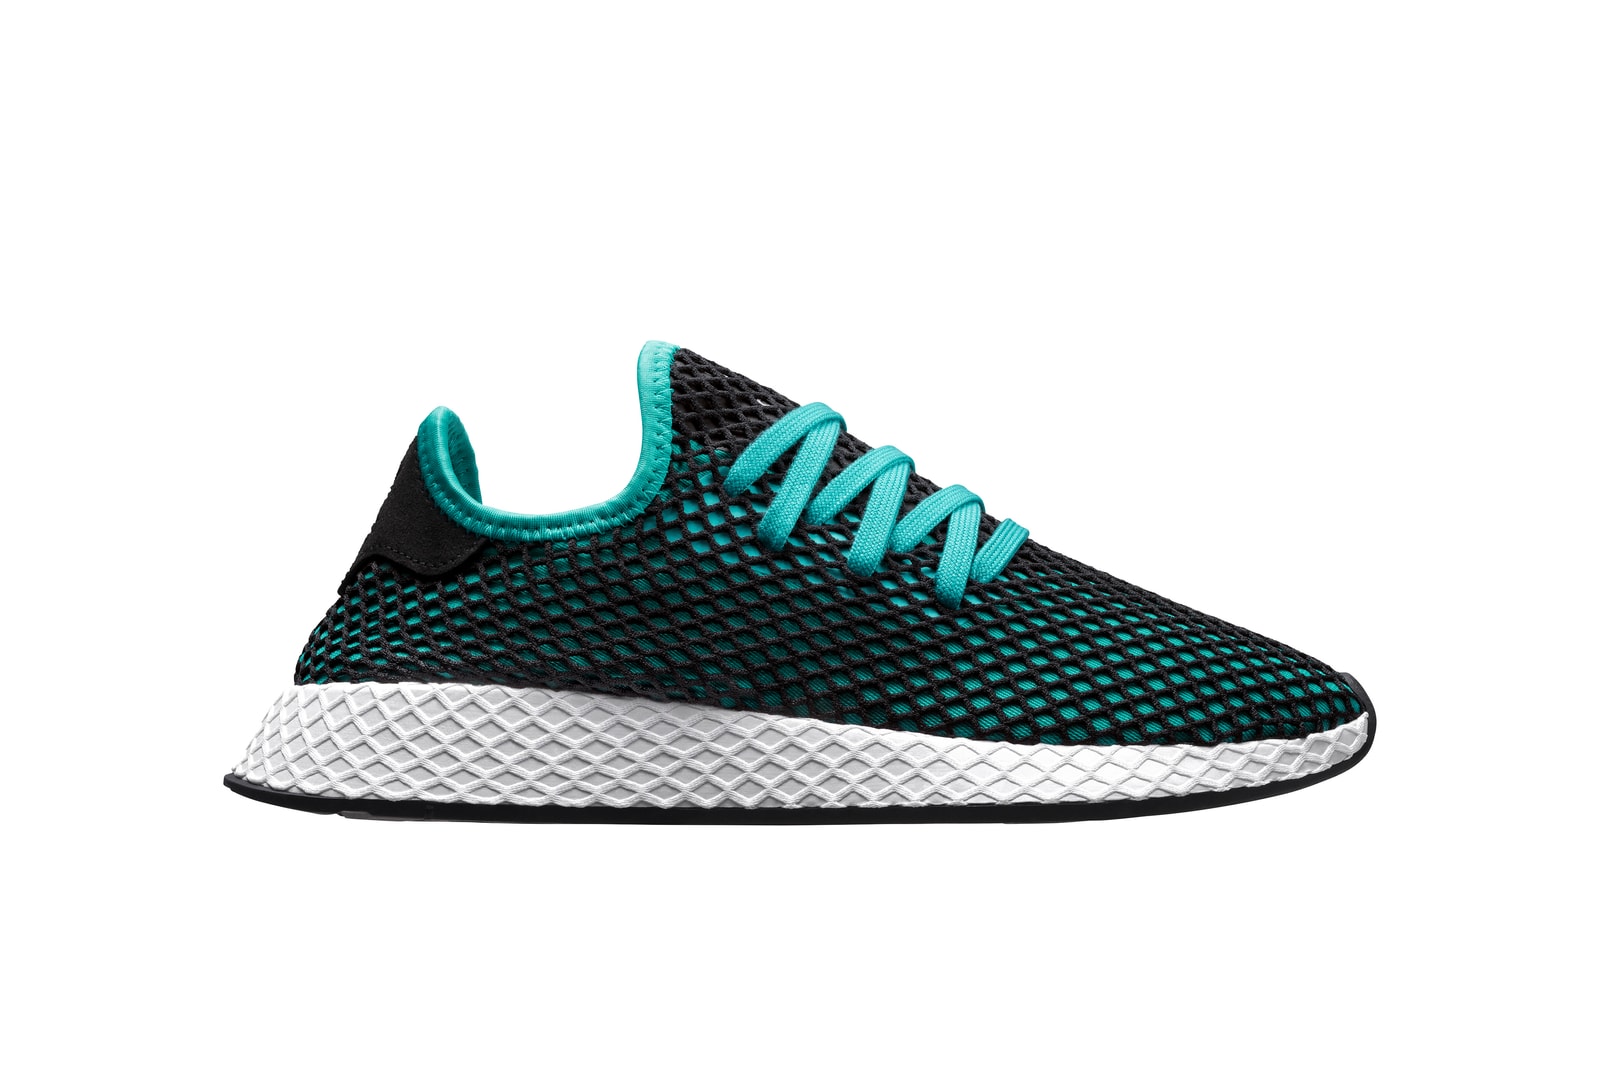 adidas Originals Deerupt Six New Colorways Pink Blue White Black Green Footwear Trainer Shoe